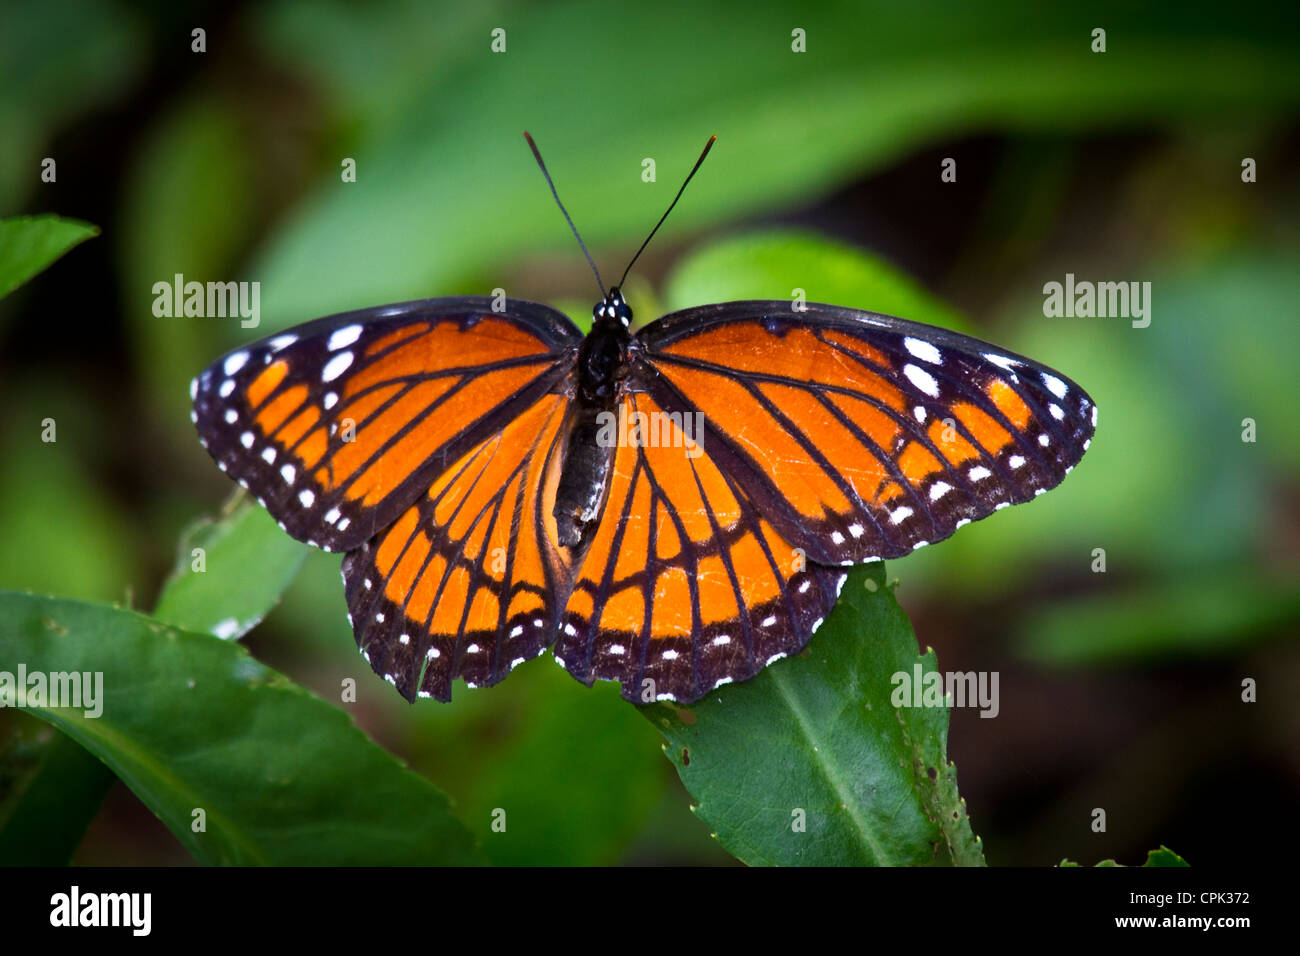 An orange butterfly Stock Photo